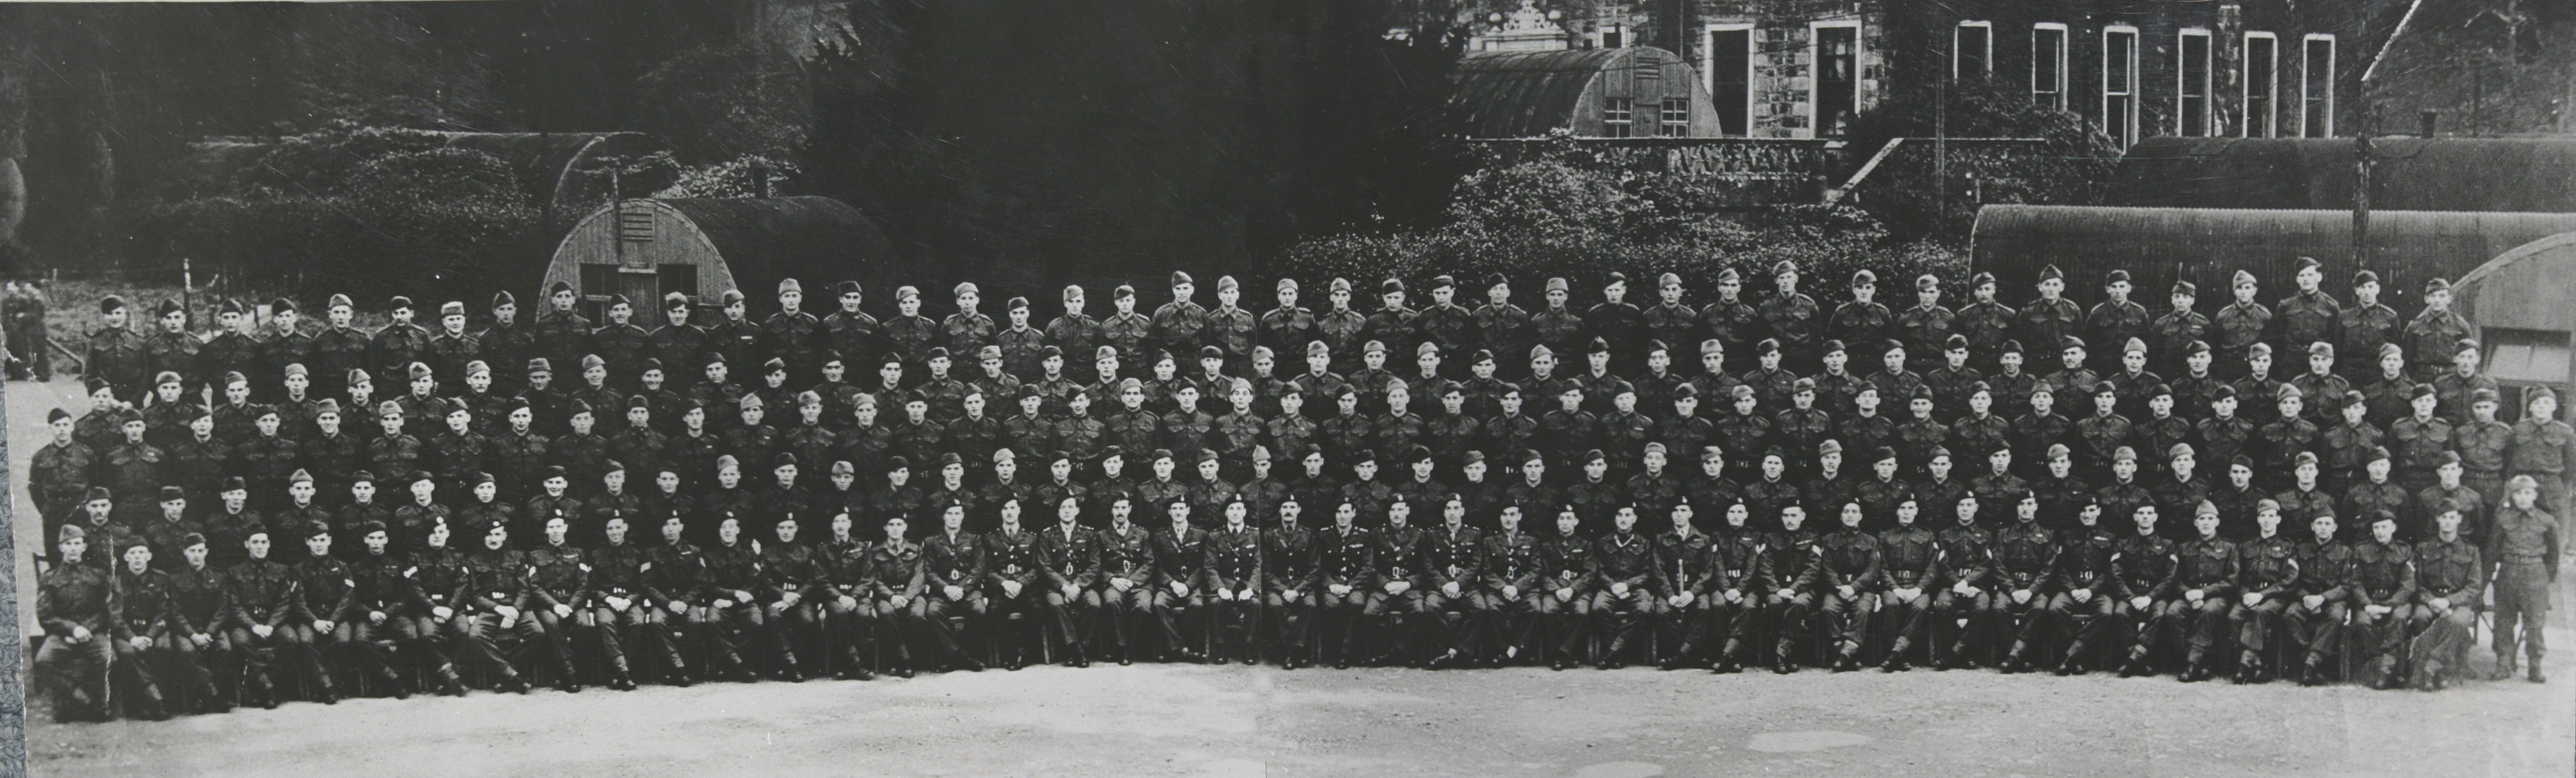 Achnacarry - Keyes Commando Course Winter 1945